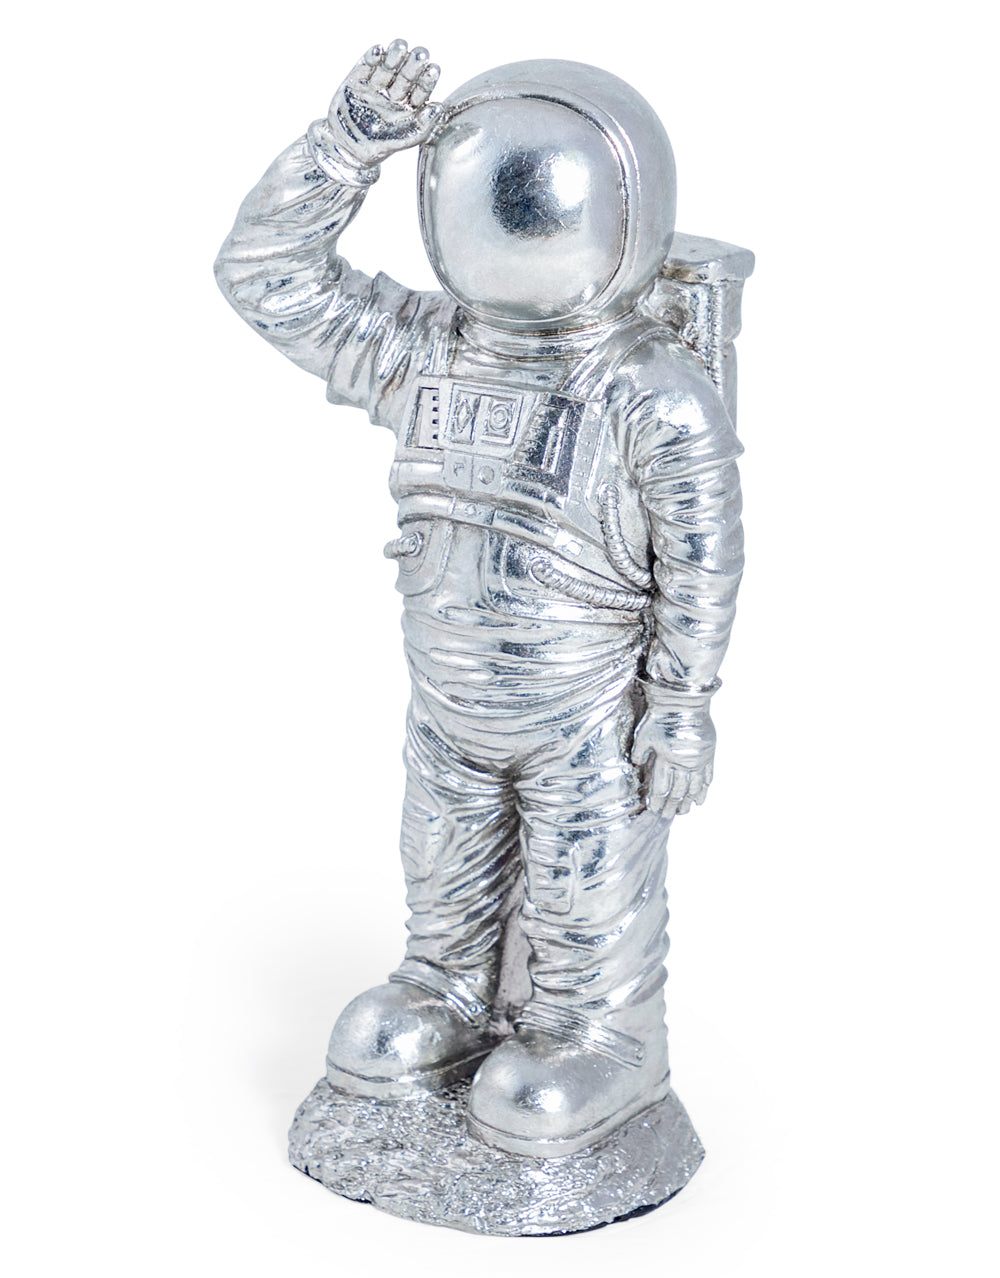 Silver Standing Astronaut Figure